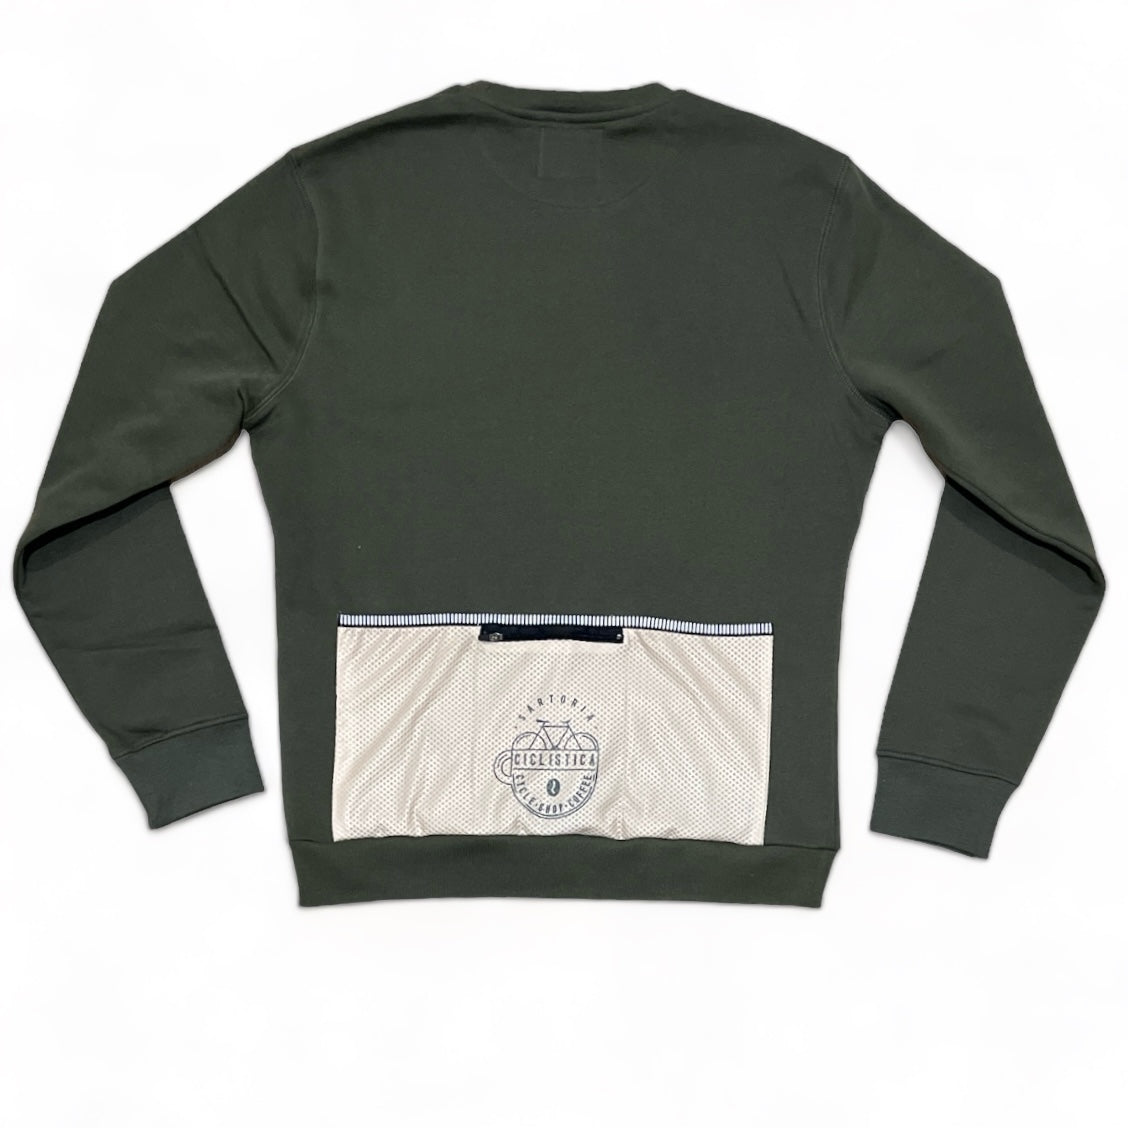 Woman fitting - Army green 3 back pockets sweatshirt